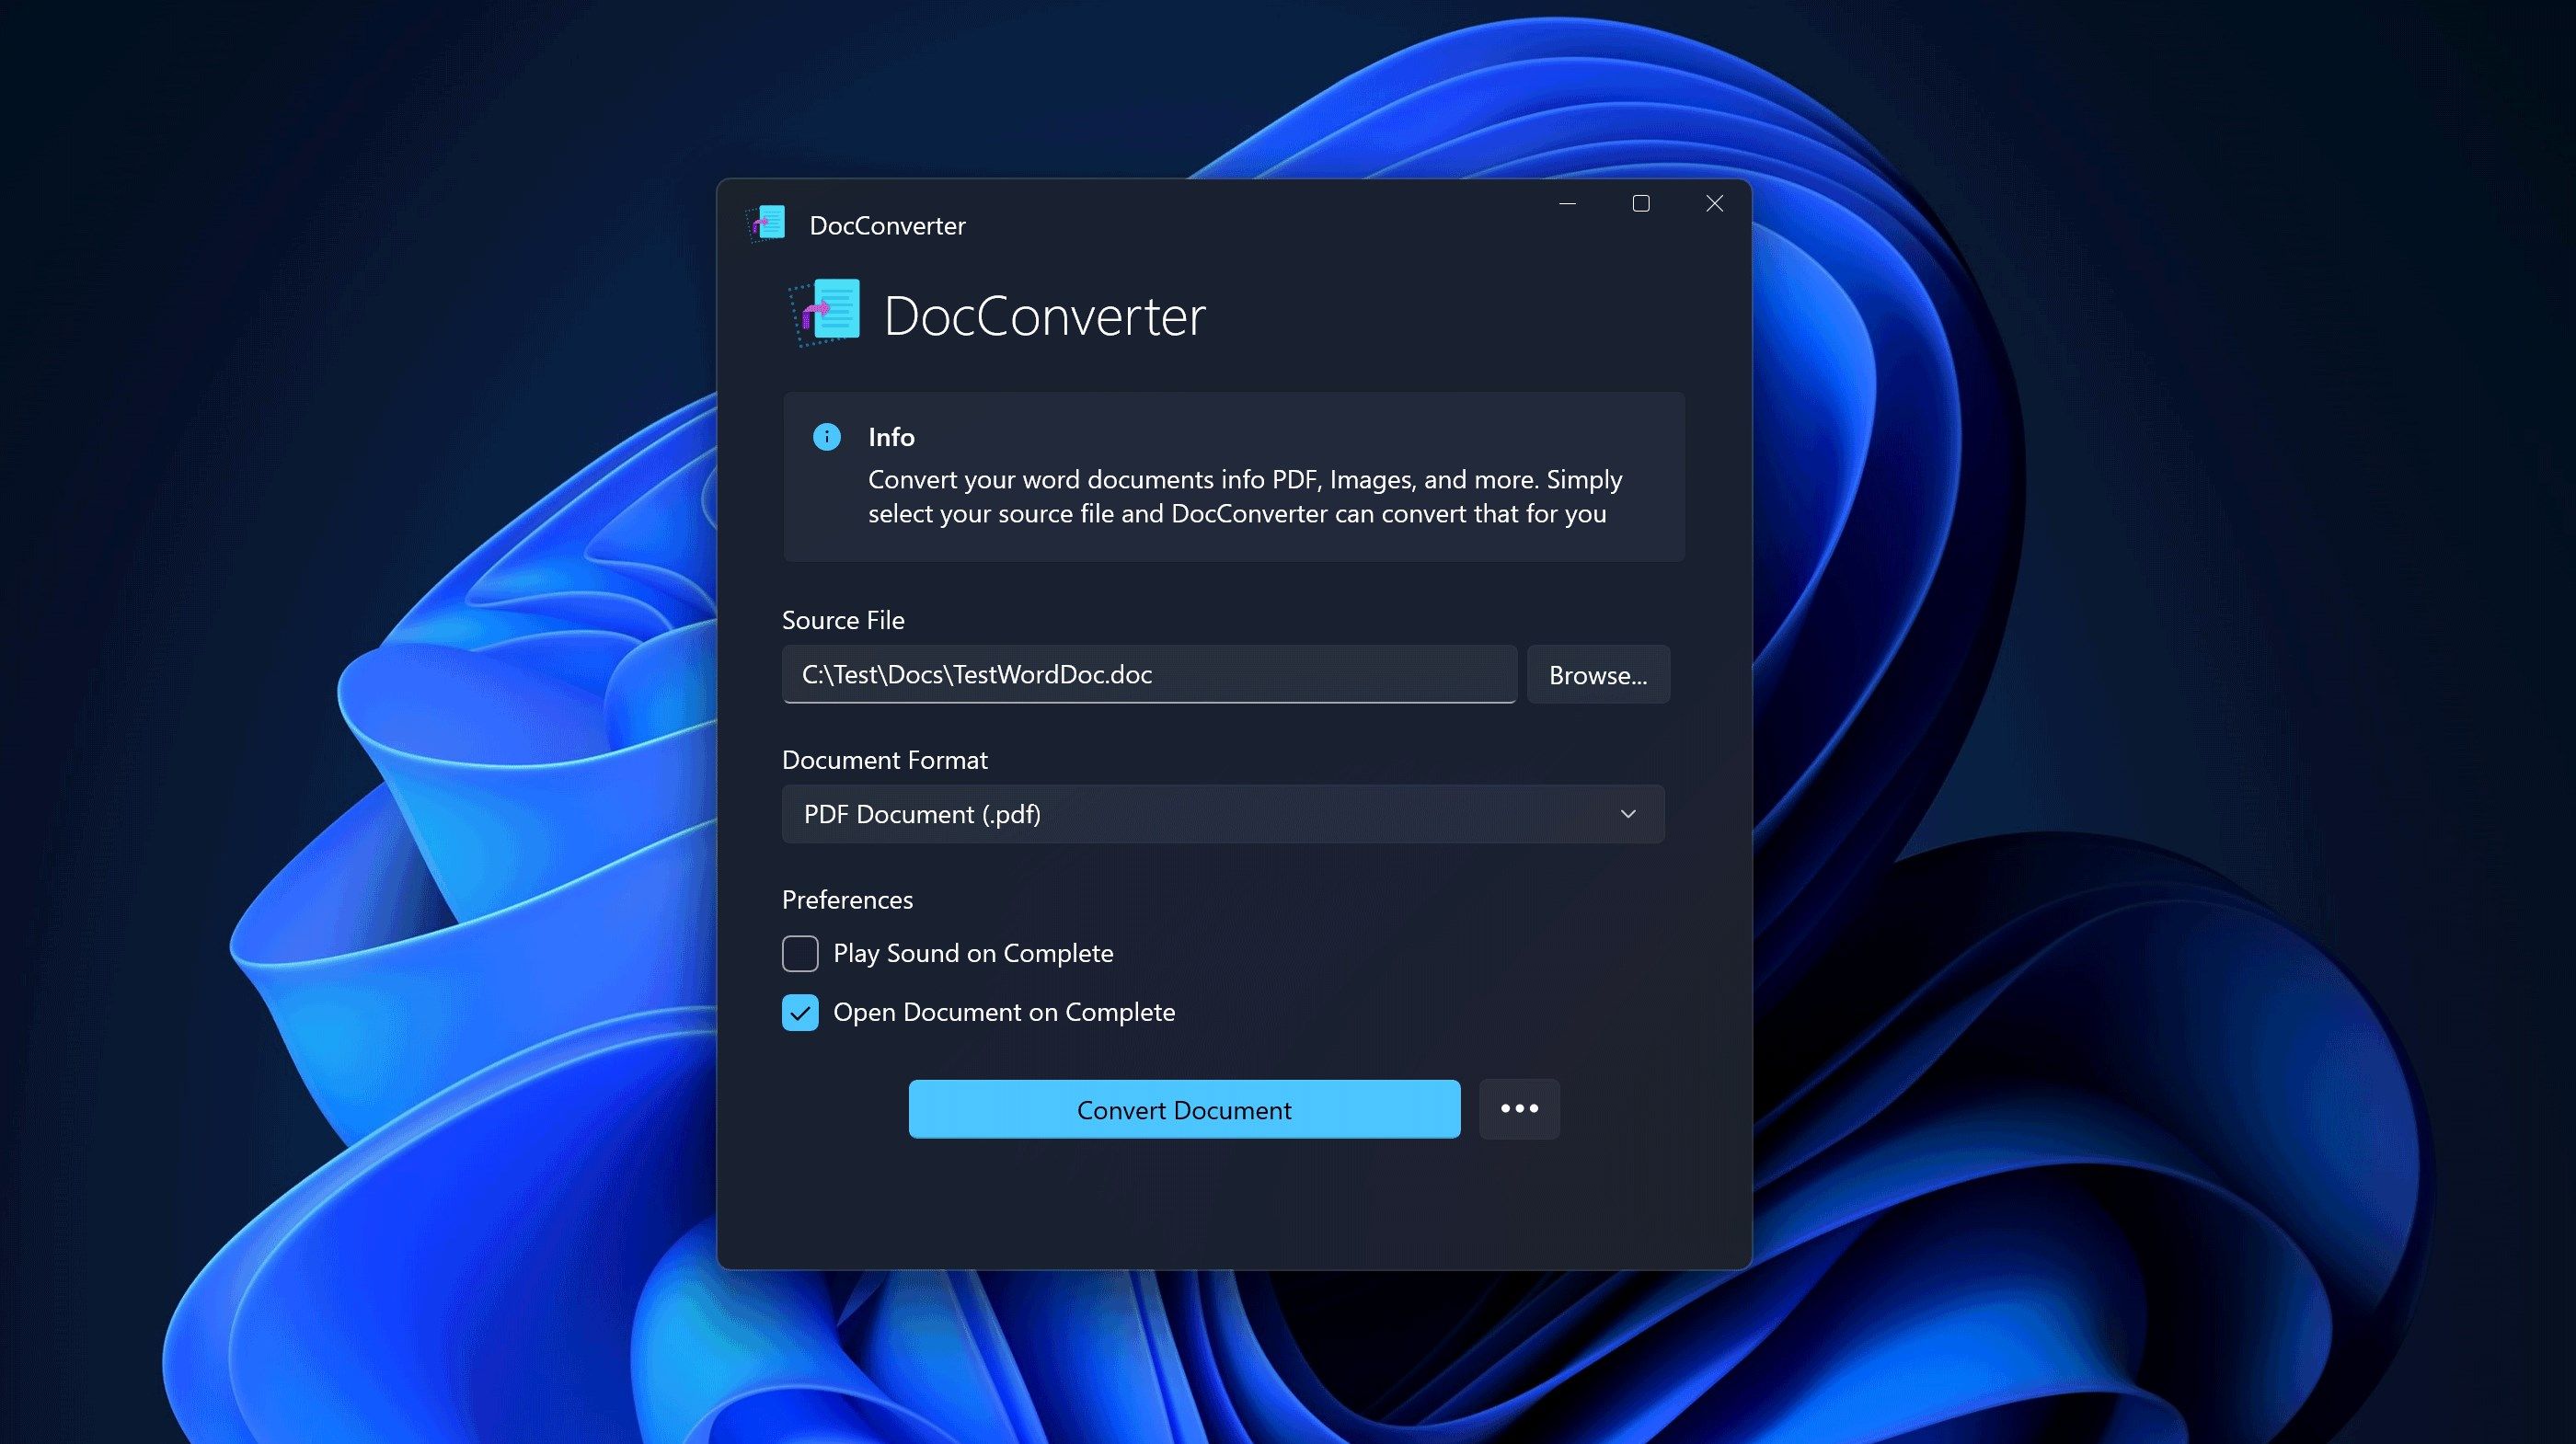 DocConverter - Convert Your Documents